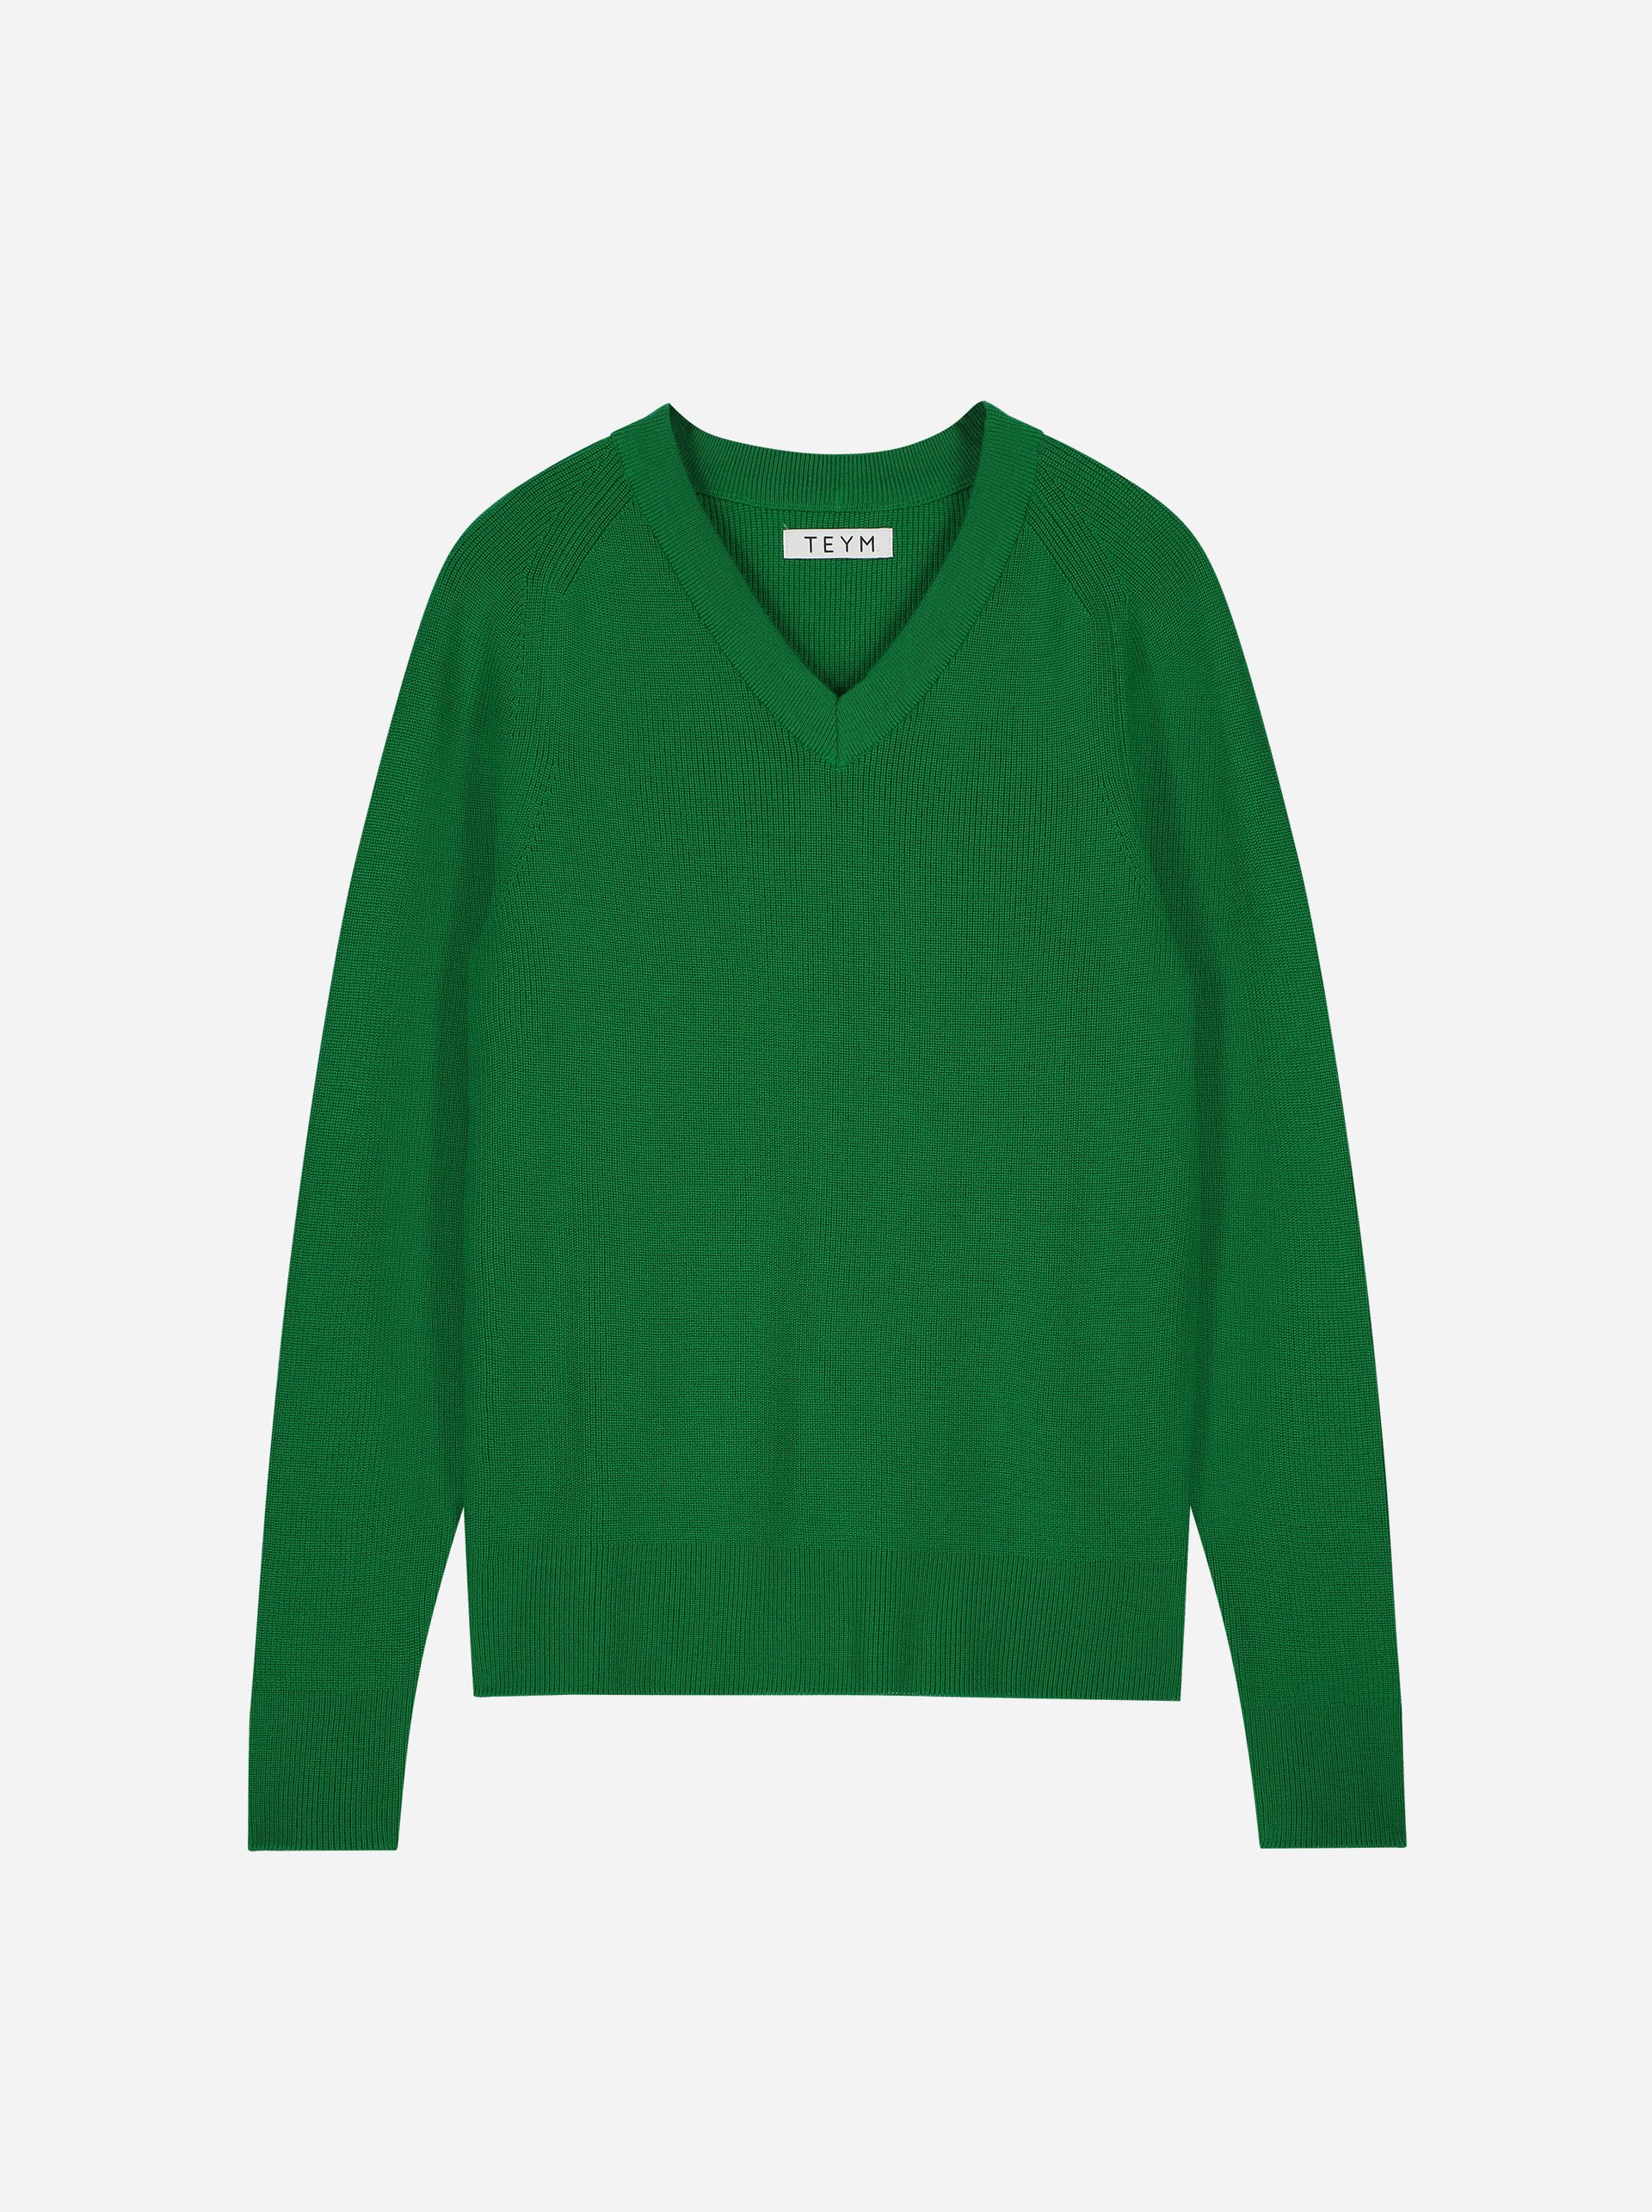 Teym - V-Neck - The Merino Sweater - Men - Bright Green - 4